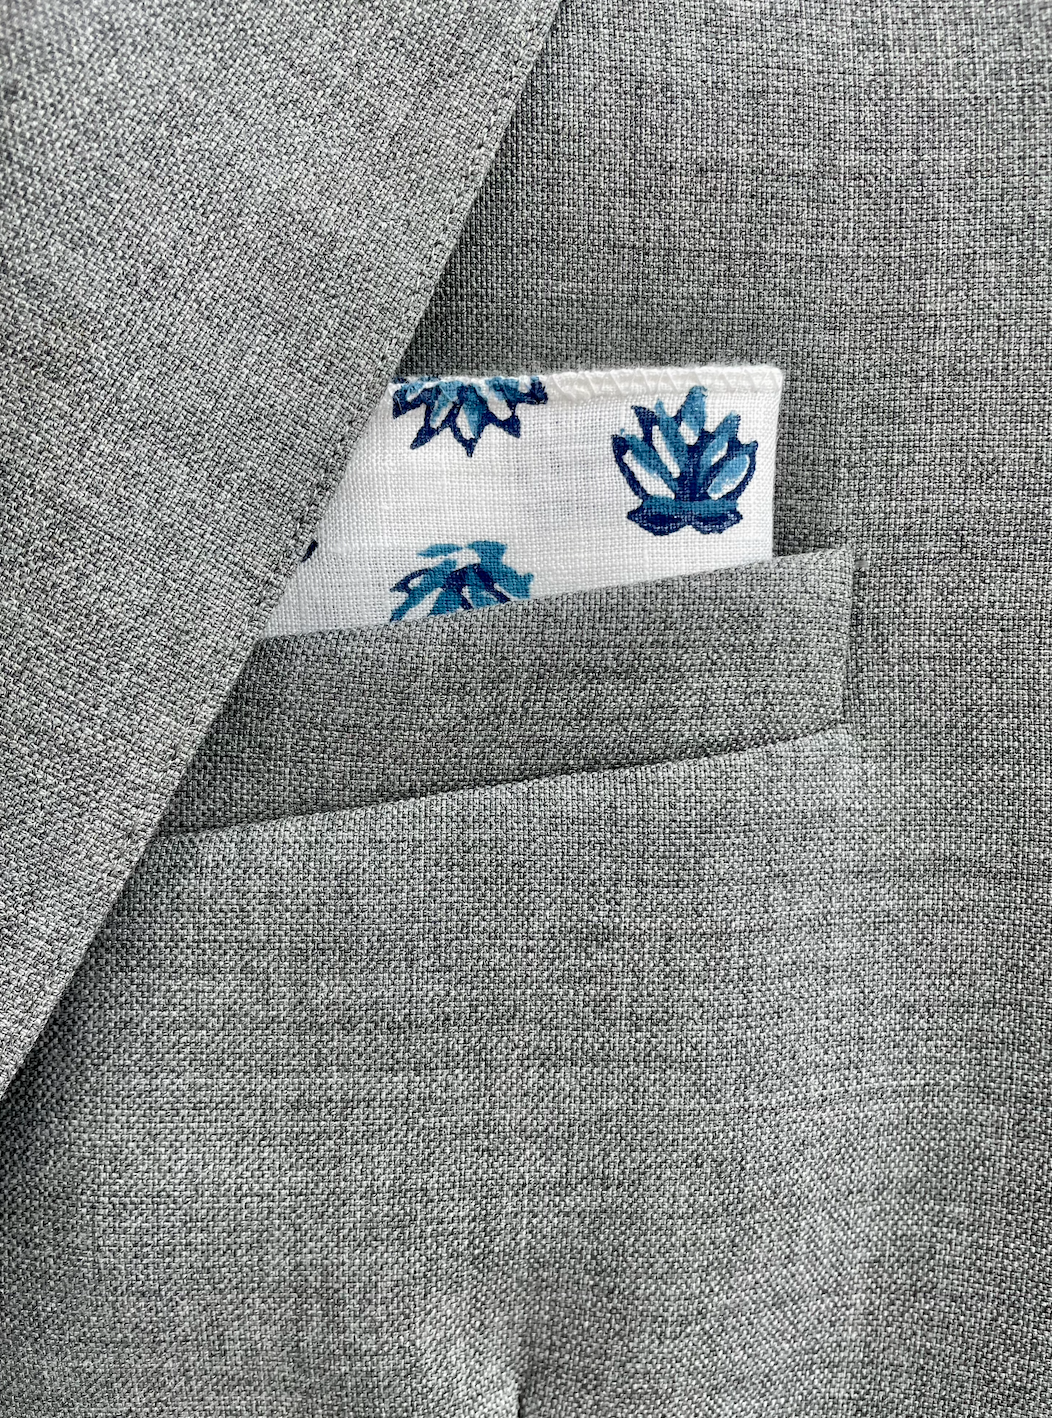 Pocket Square - White Linen with Uniform Blue & Navy